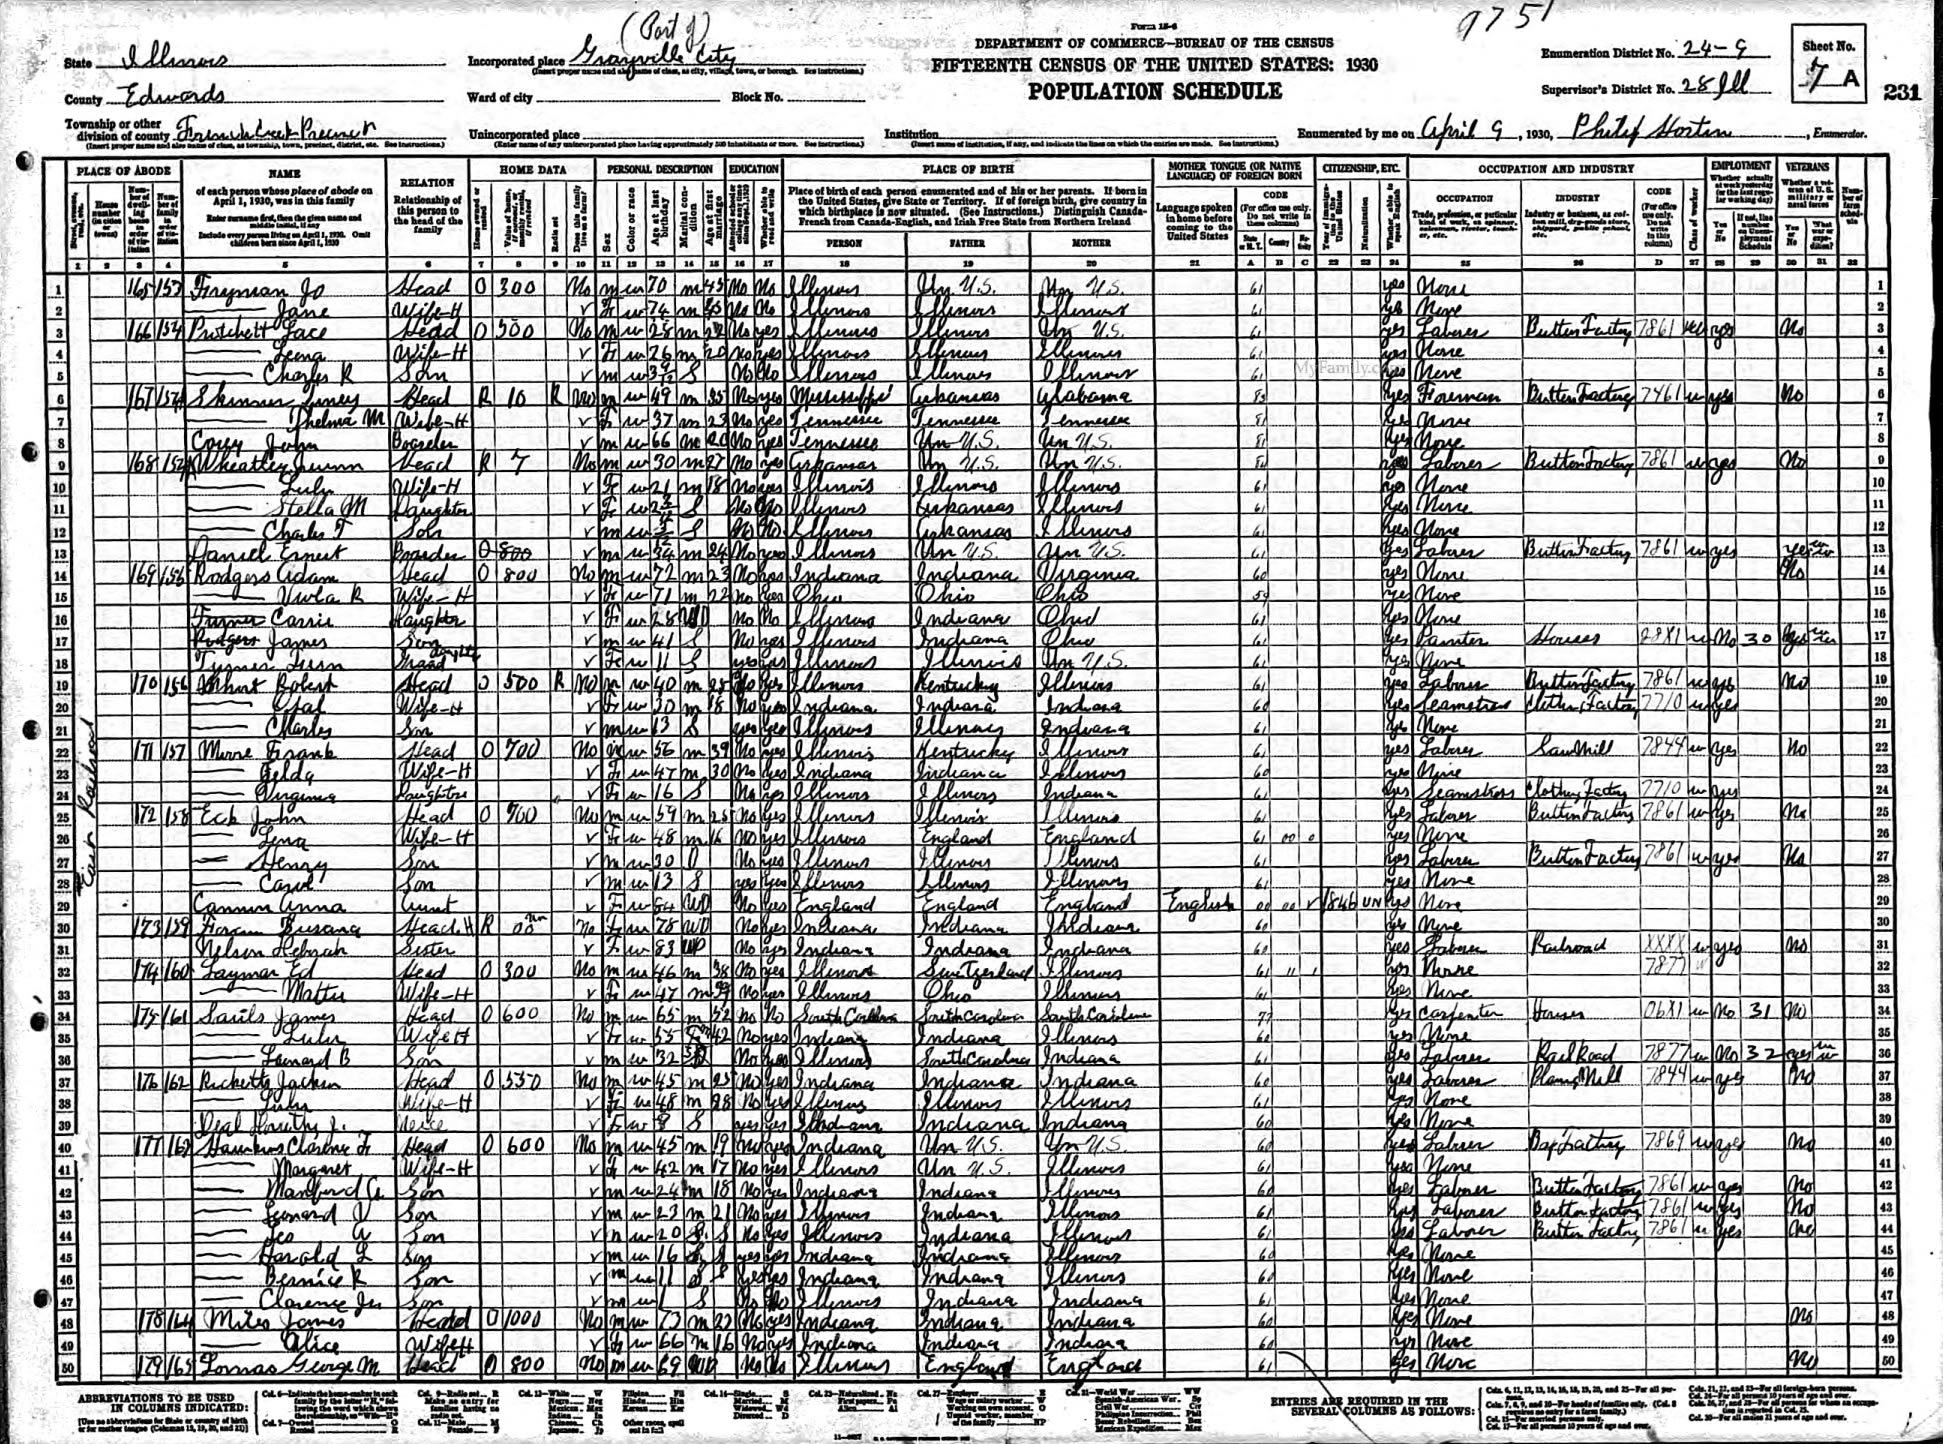 1930 Census - Hawkins Edwards County IL